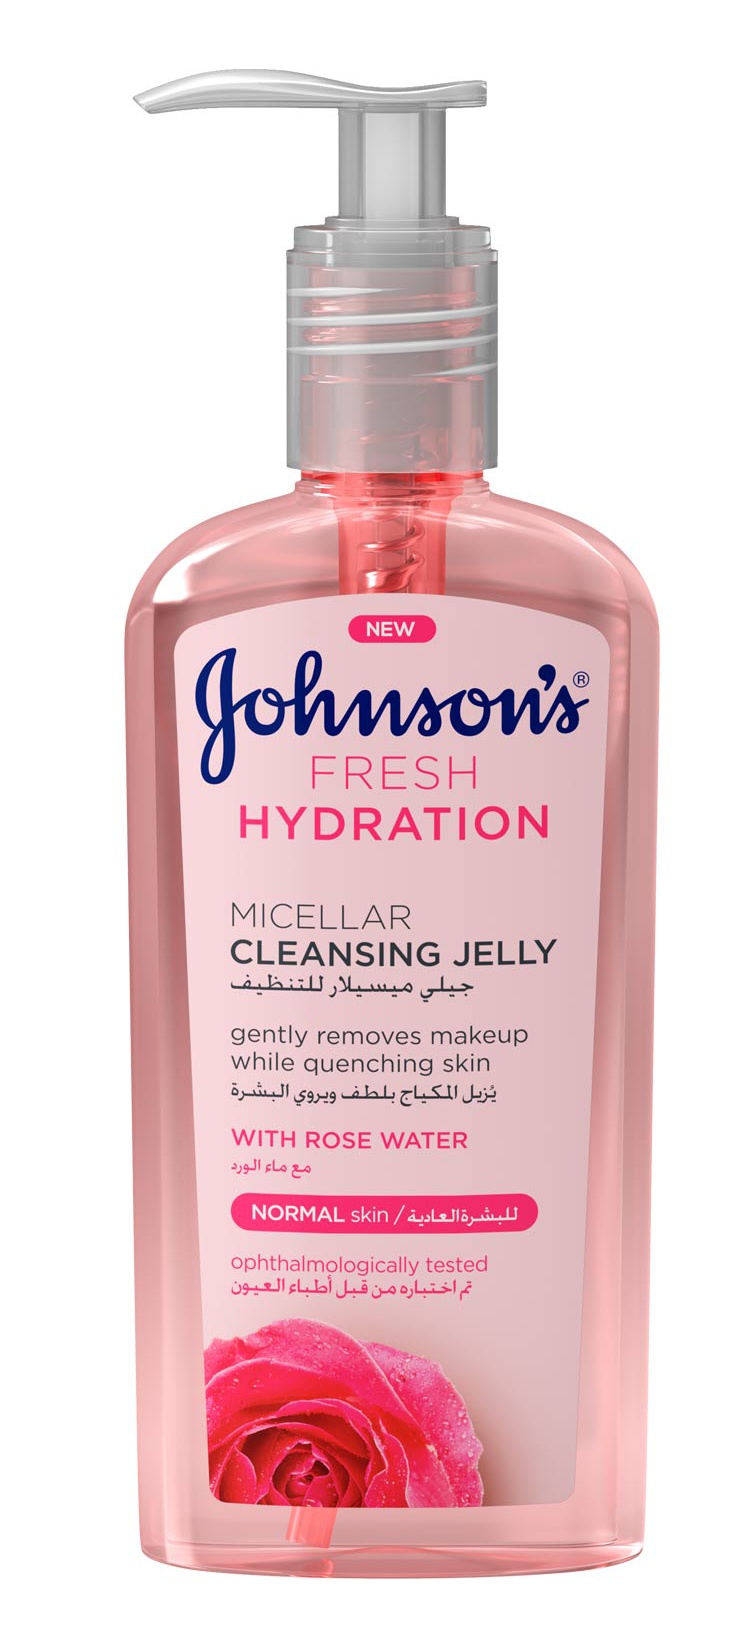 Johnson's Fresh Hydration Micellar Cleansing Jelly